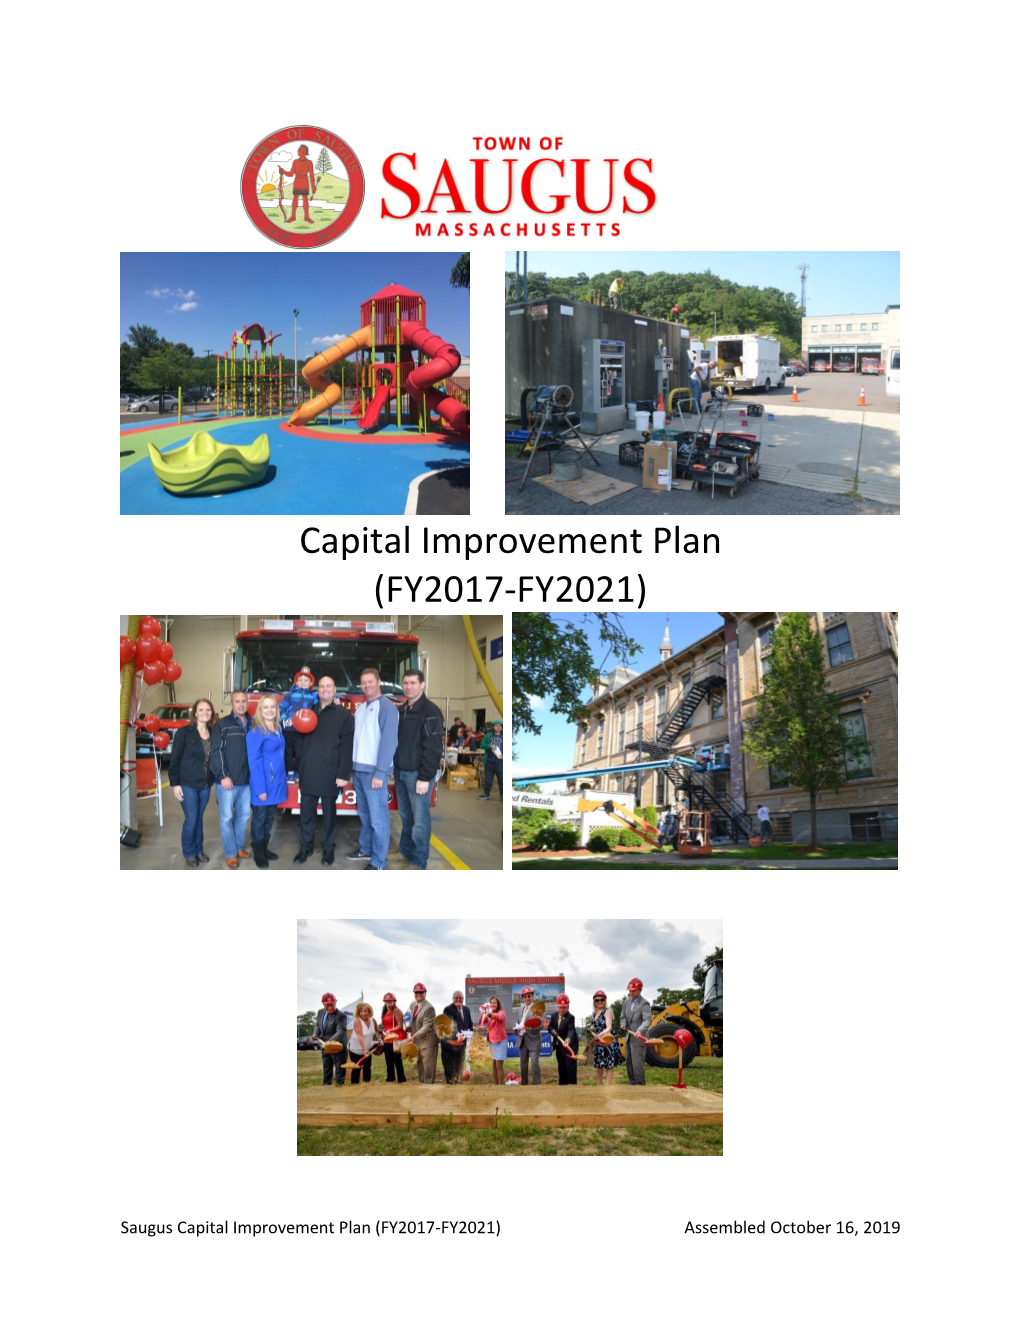 Saugus Capital Improvement Plan FY2017-FY2021